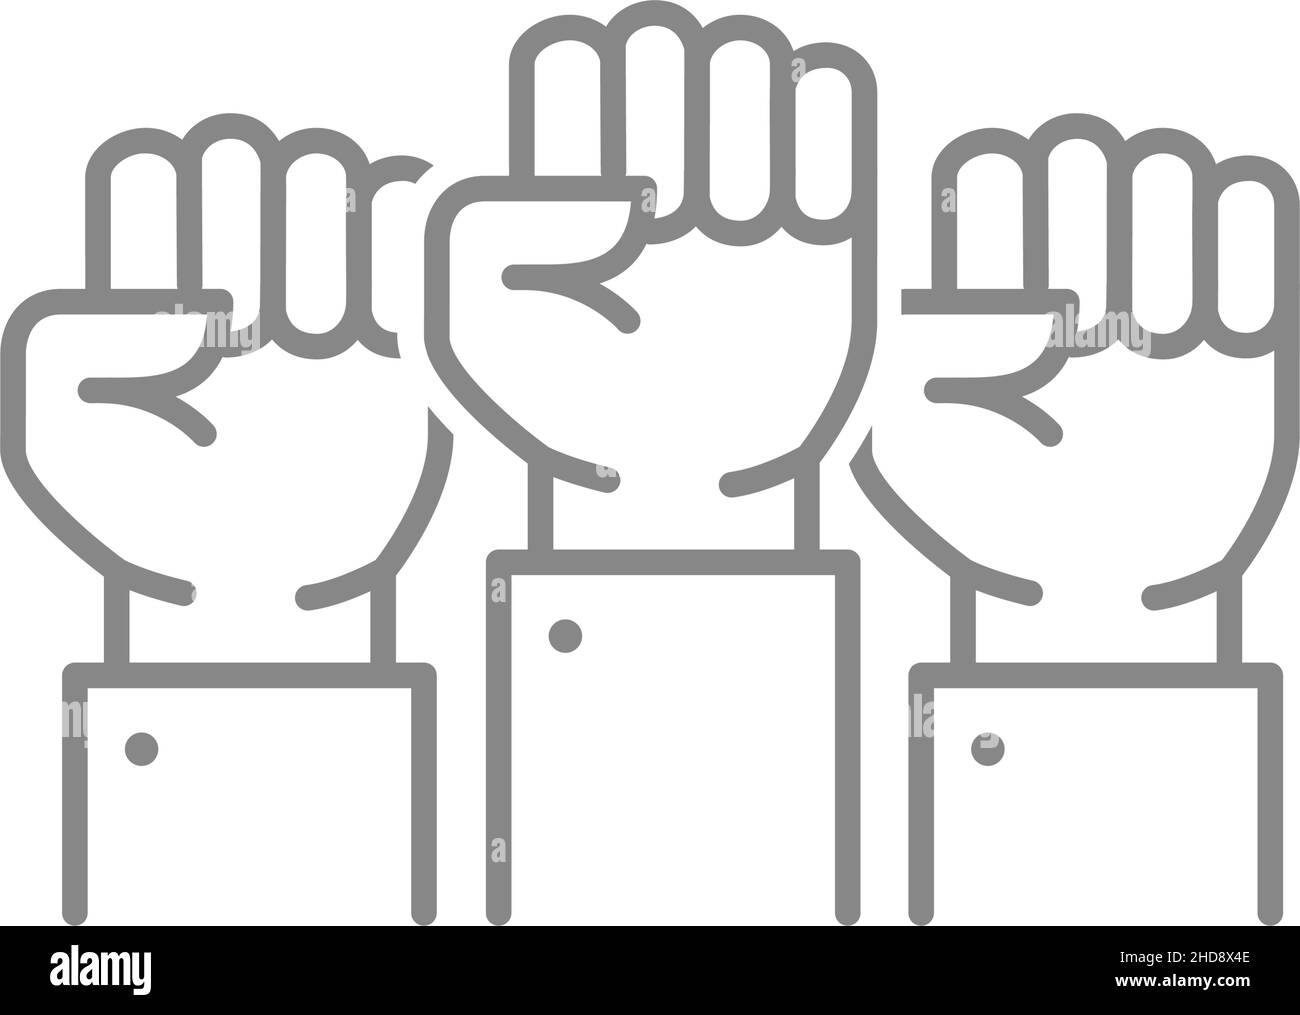 Three raised fists line icon. Unity, teamwork symbol Stock Vector Image ...